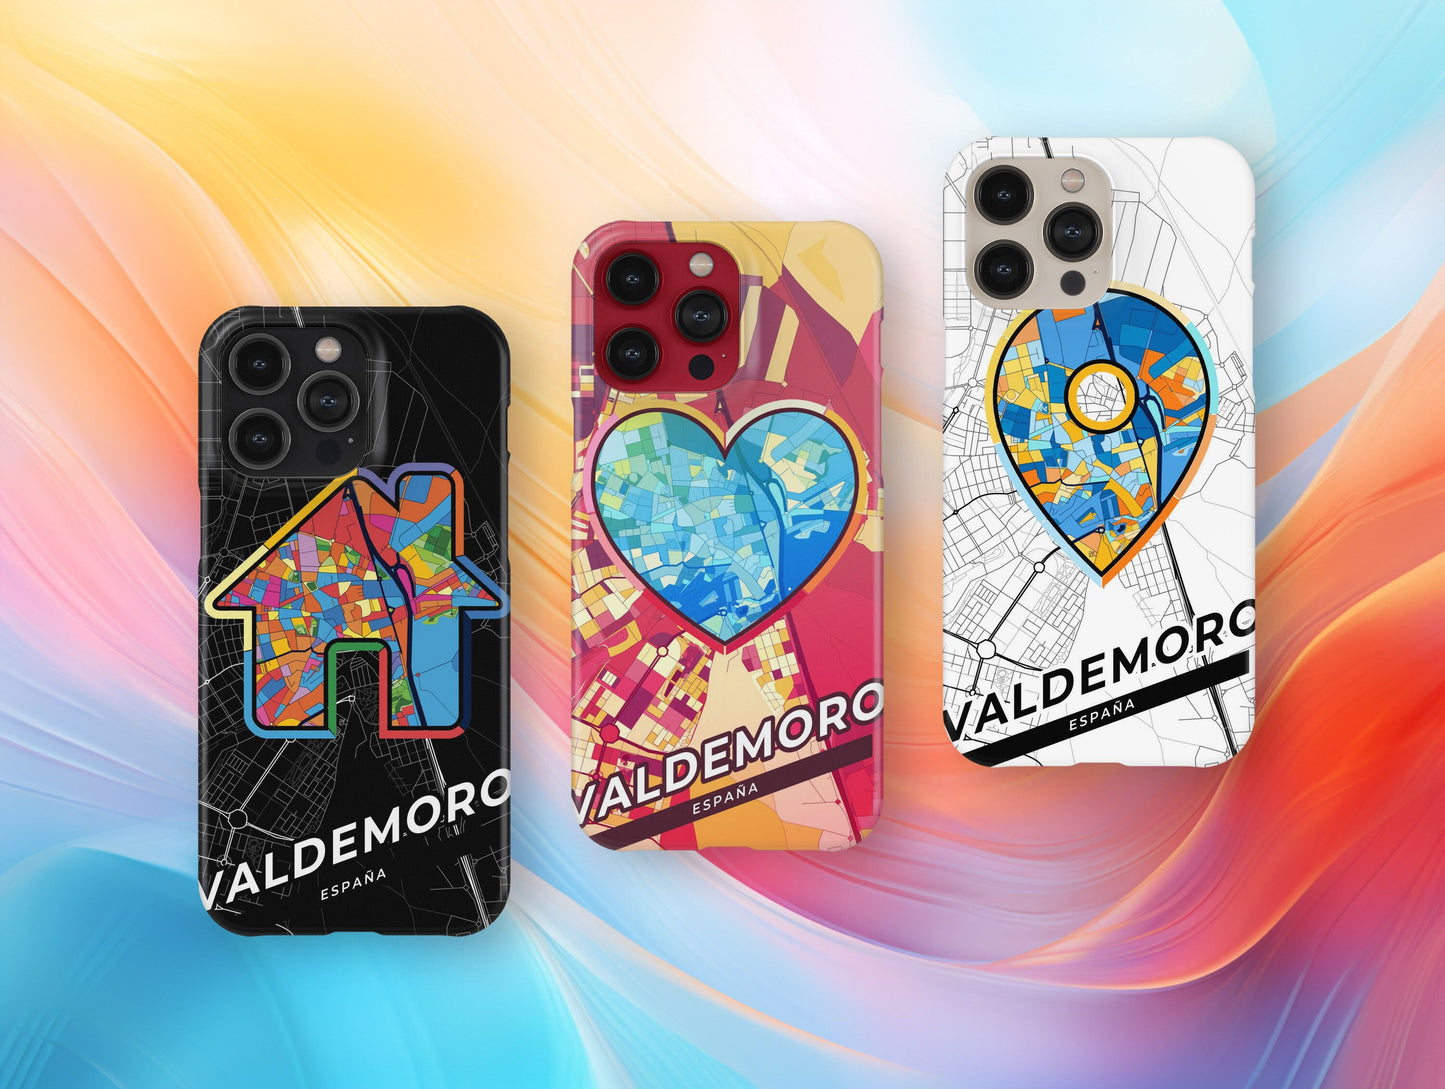 Valdemoro Spain slim phone case with colorful icon